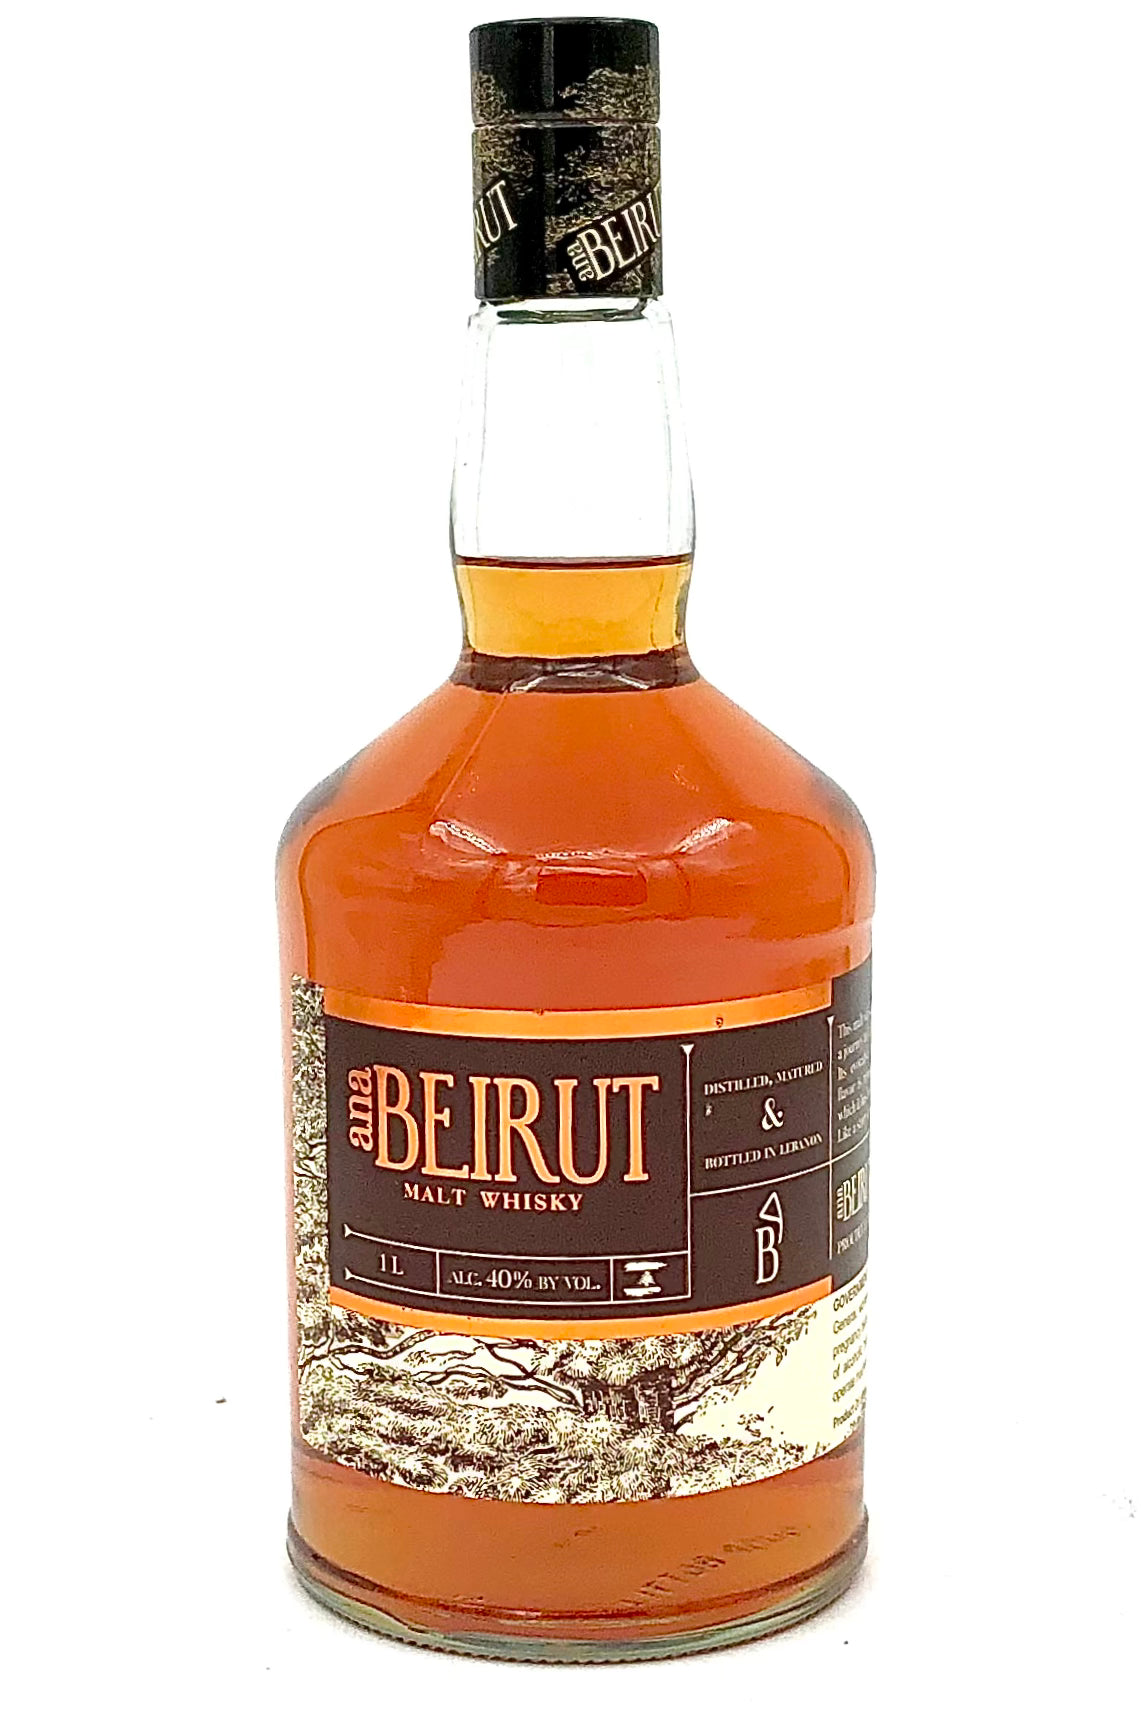 Ana Beirut Malt Whiskey